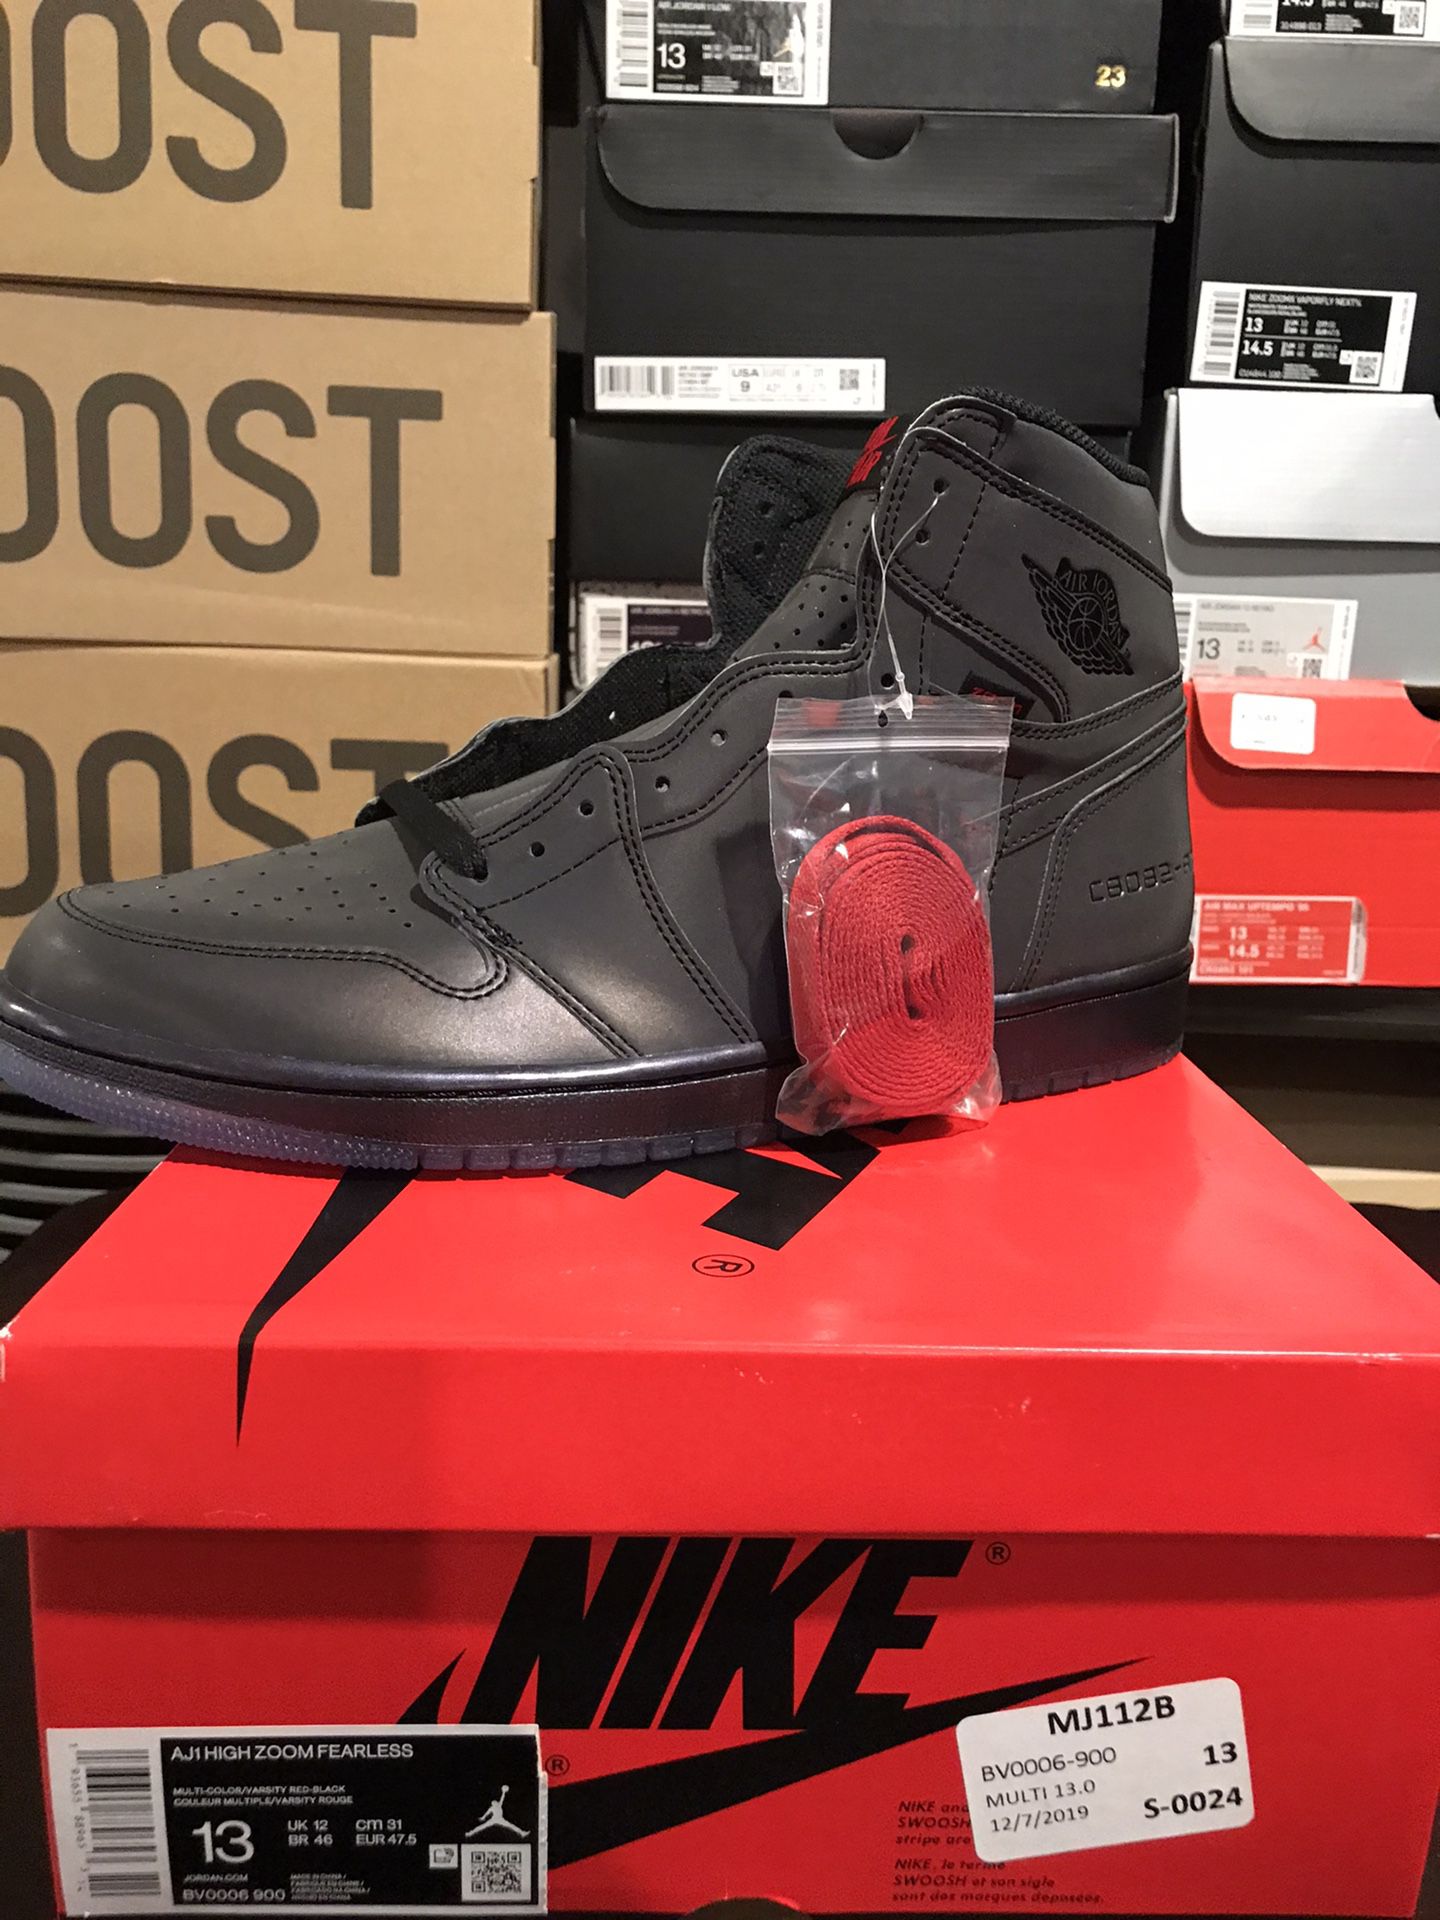 Nike Air Jordan Zoom Fearless - Size 13